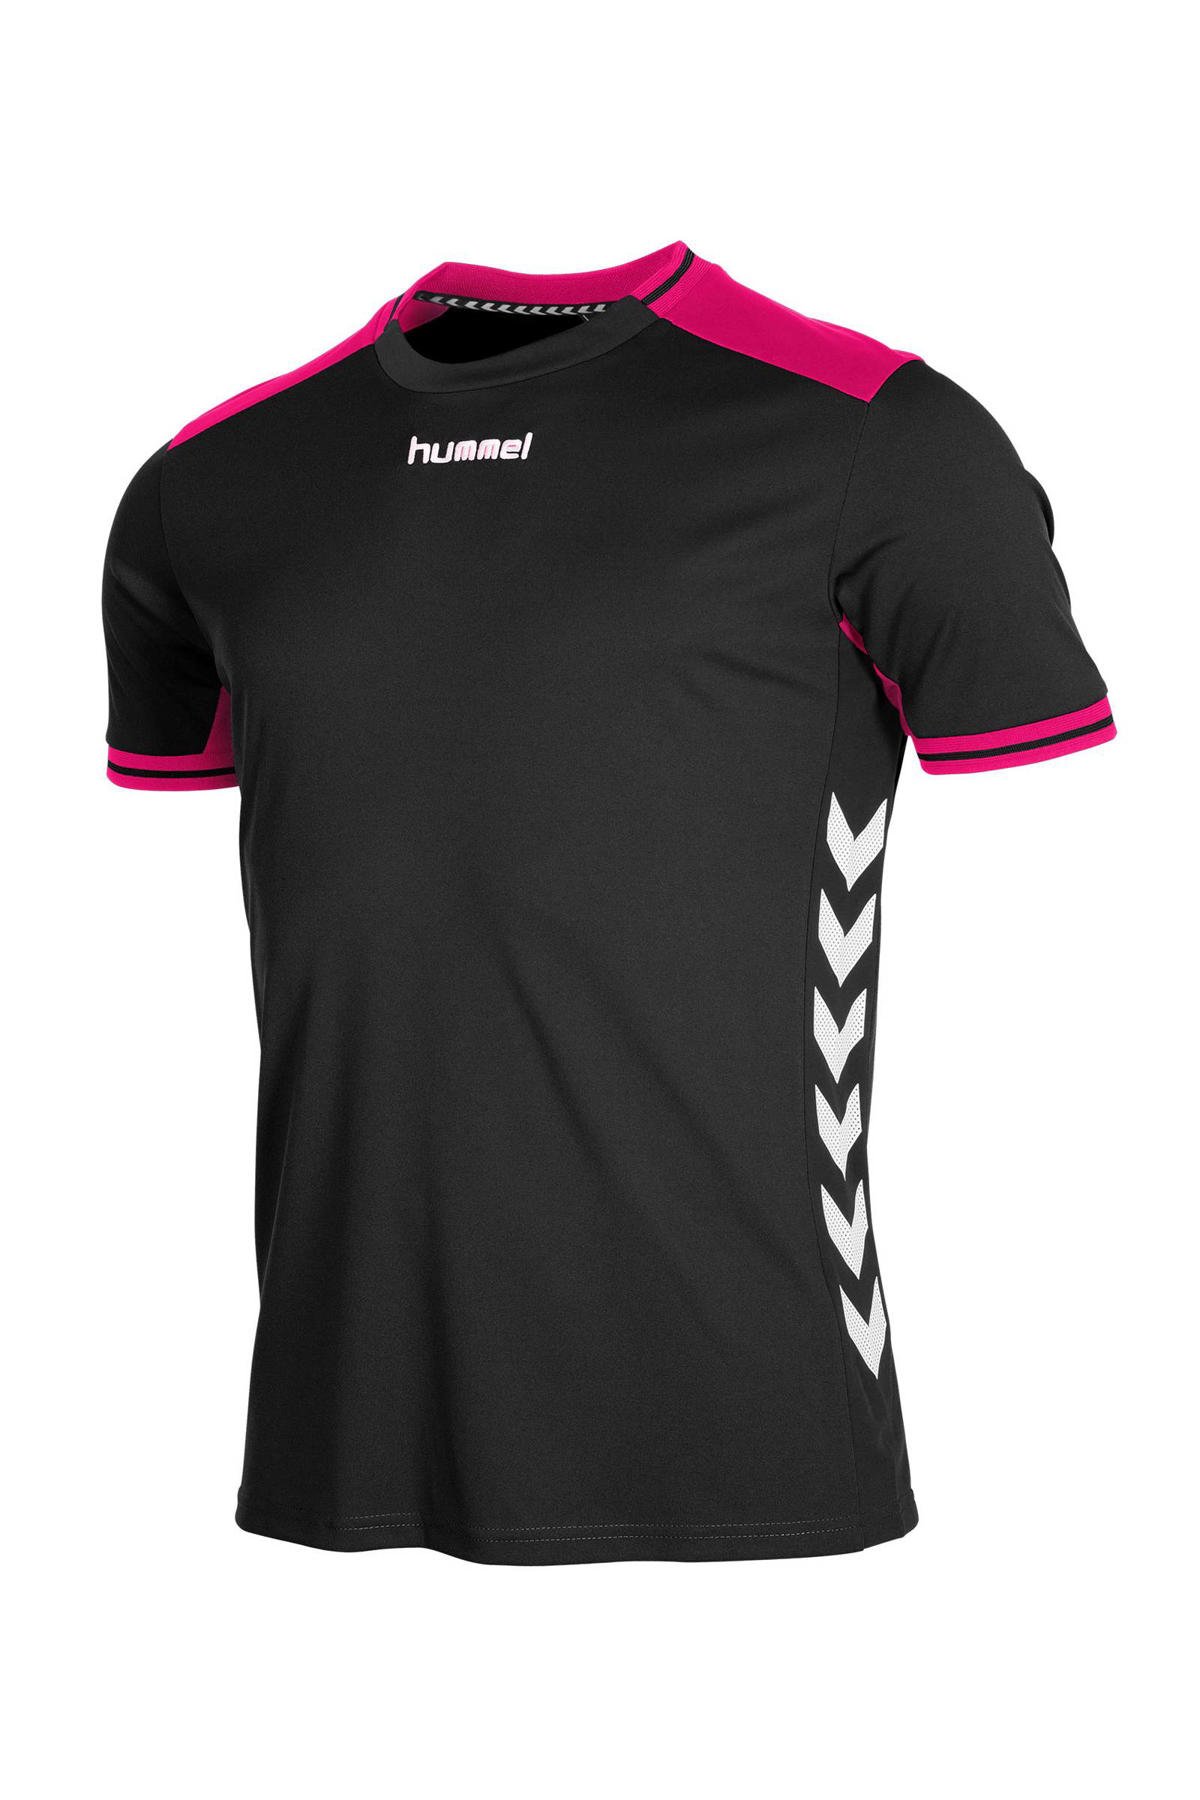 Ongunstig positie afdeling hummel sport T-shirt zwart/roze | wehkamp